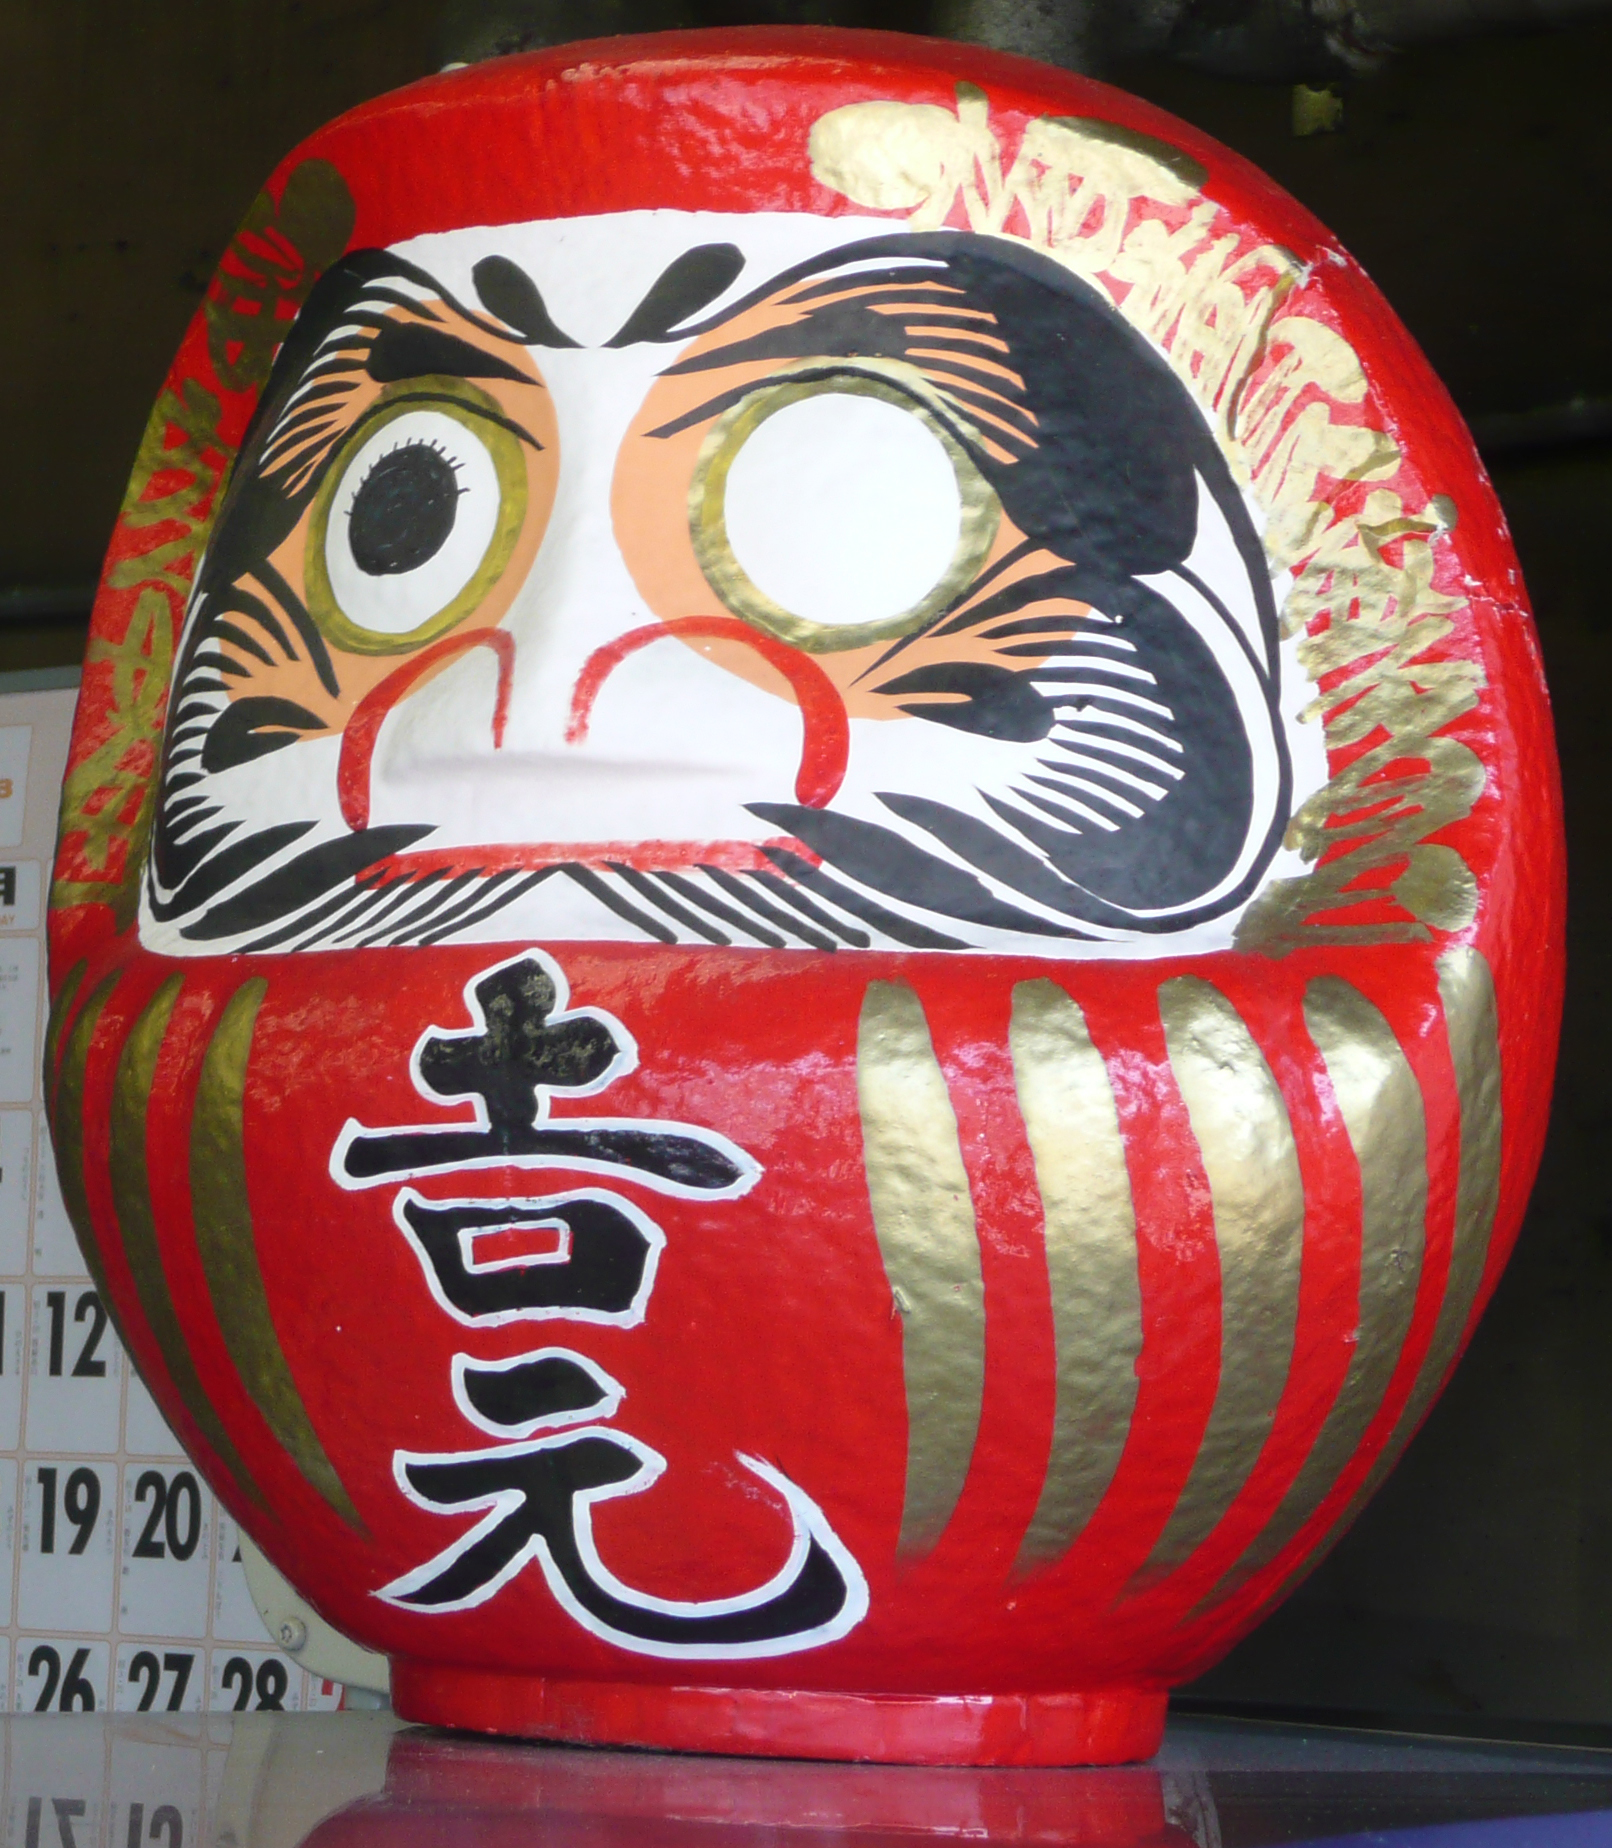 Japanese daruma doll missing one eye.